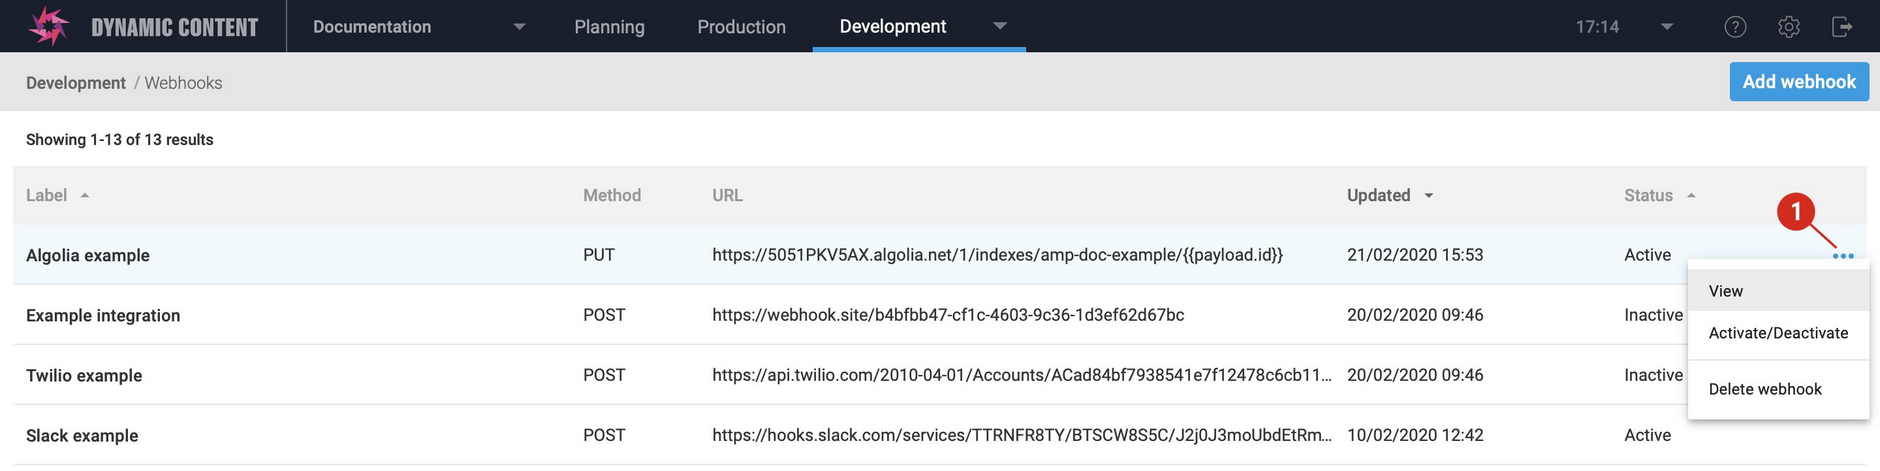 Opening the webhook configuration window for the Algolia webhook